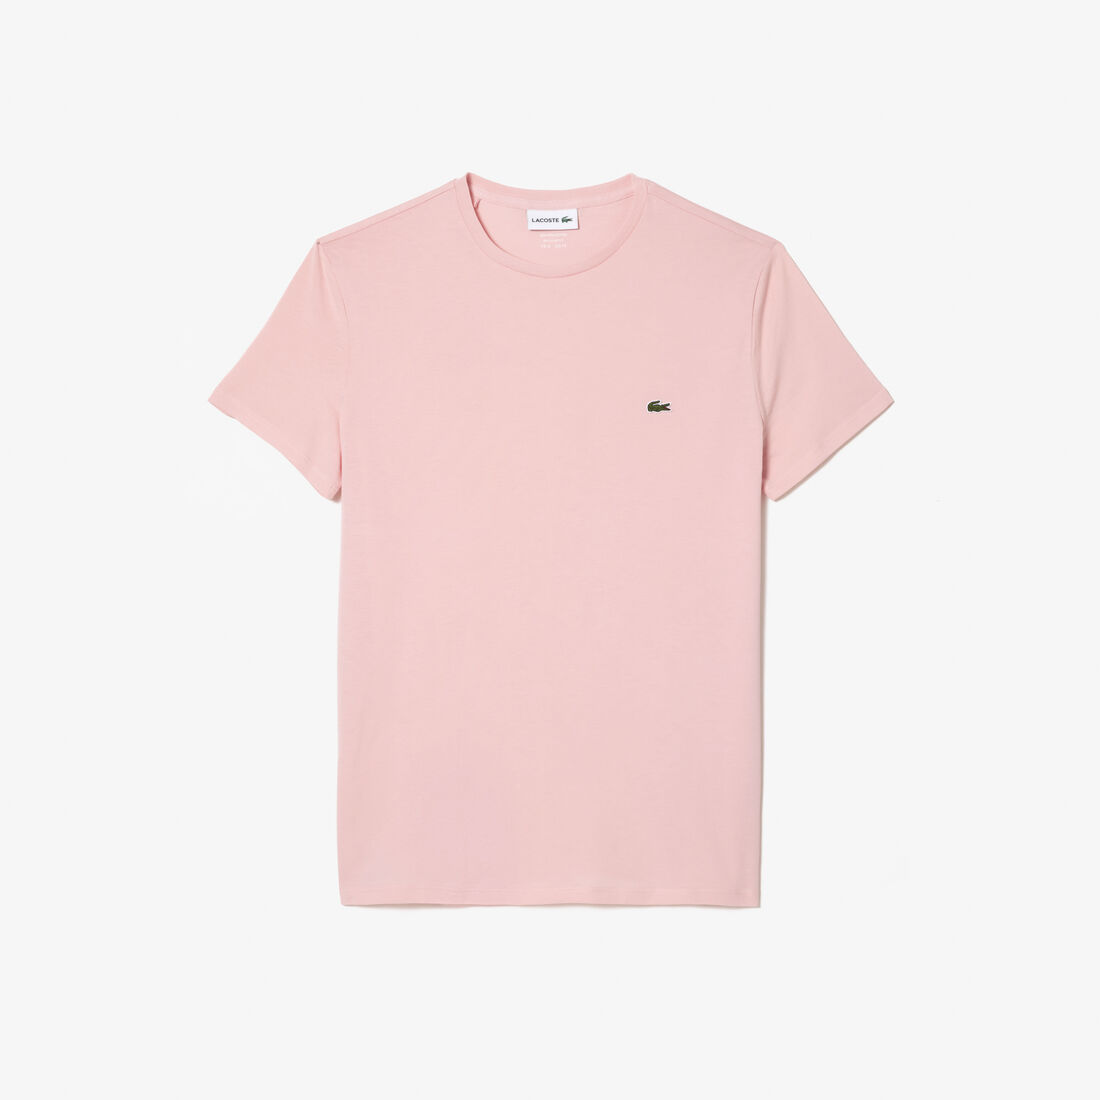 Lacoste - Pima Cotton Jersey T-Shirt, Crew Neck - Light Pink